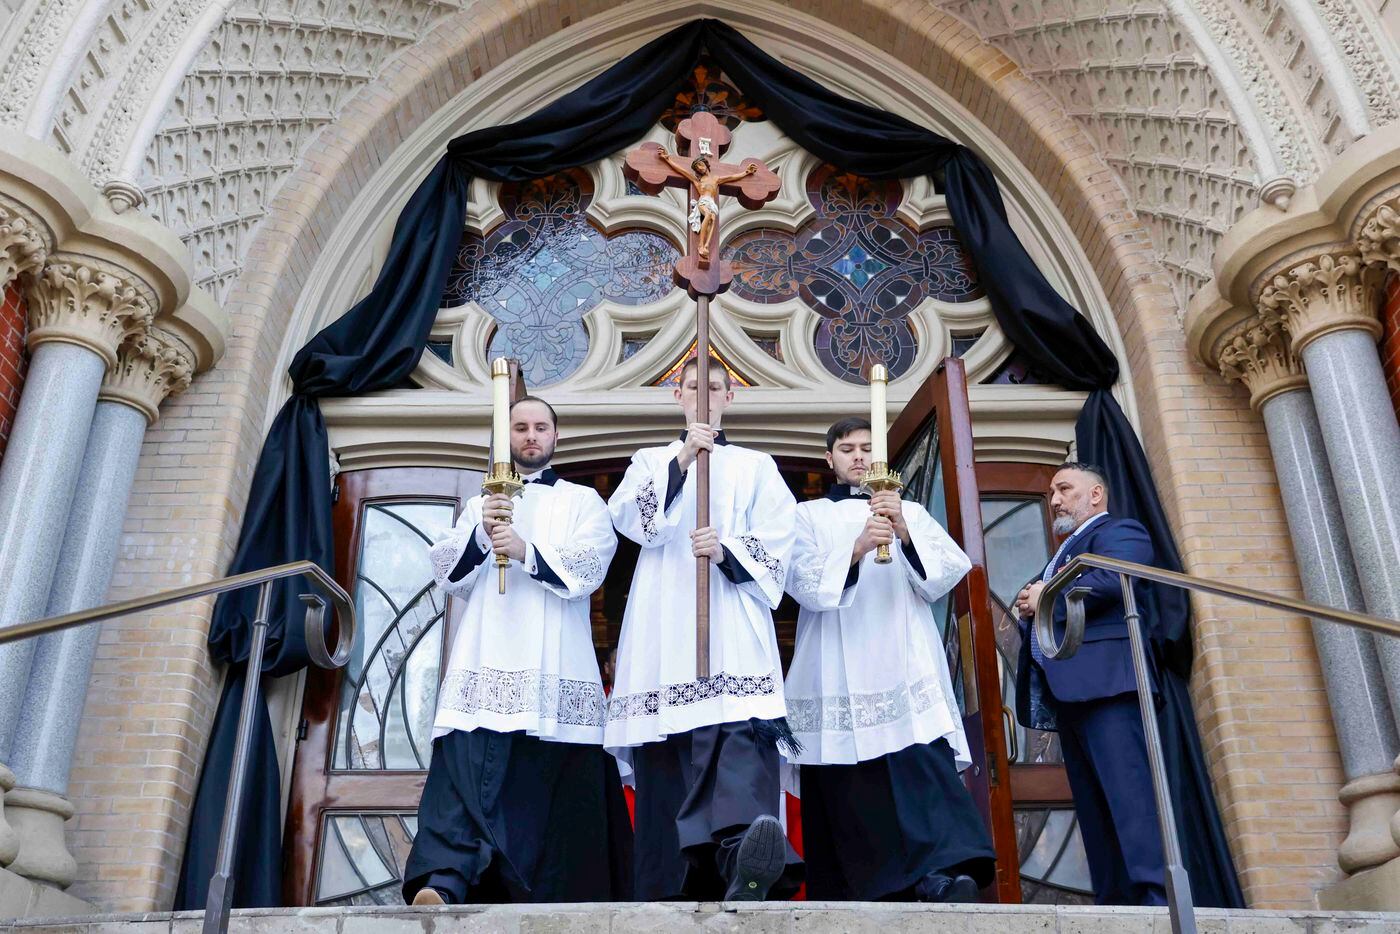 Seminarians process out of the church’s main entrance draped by black bunting symbolizing...